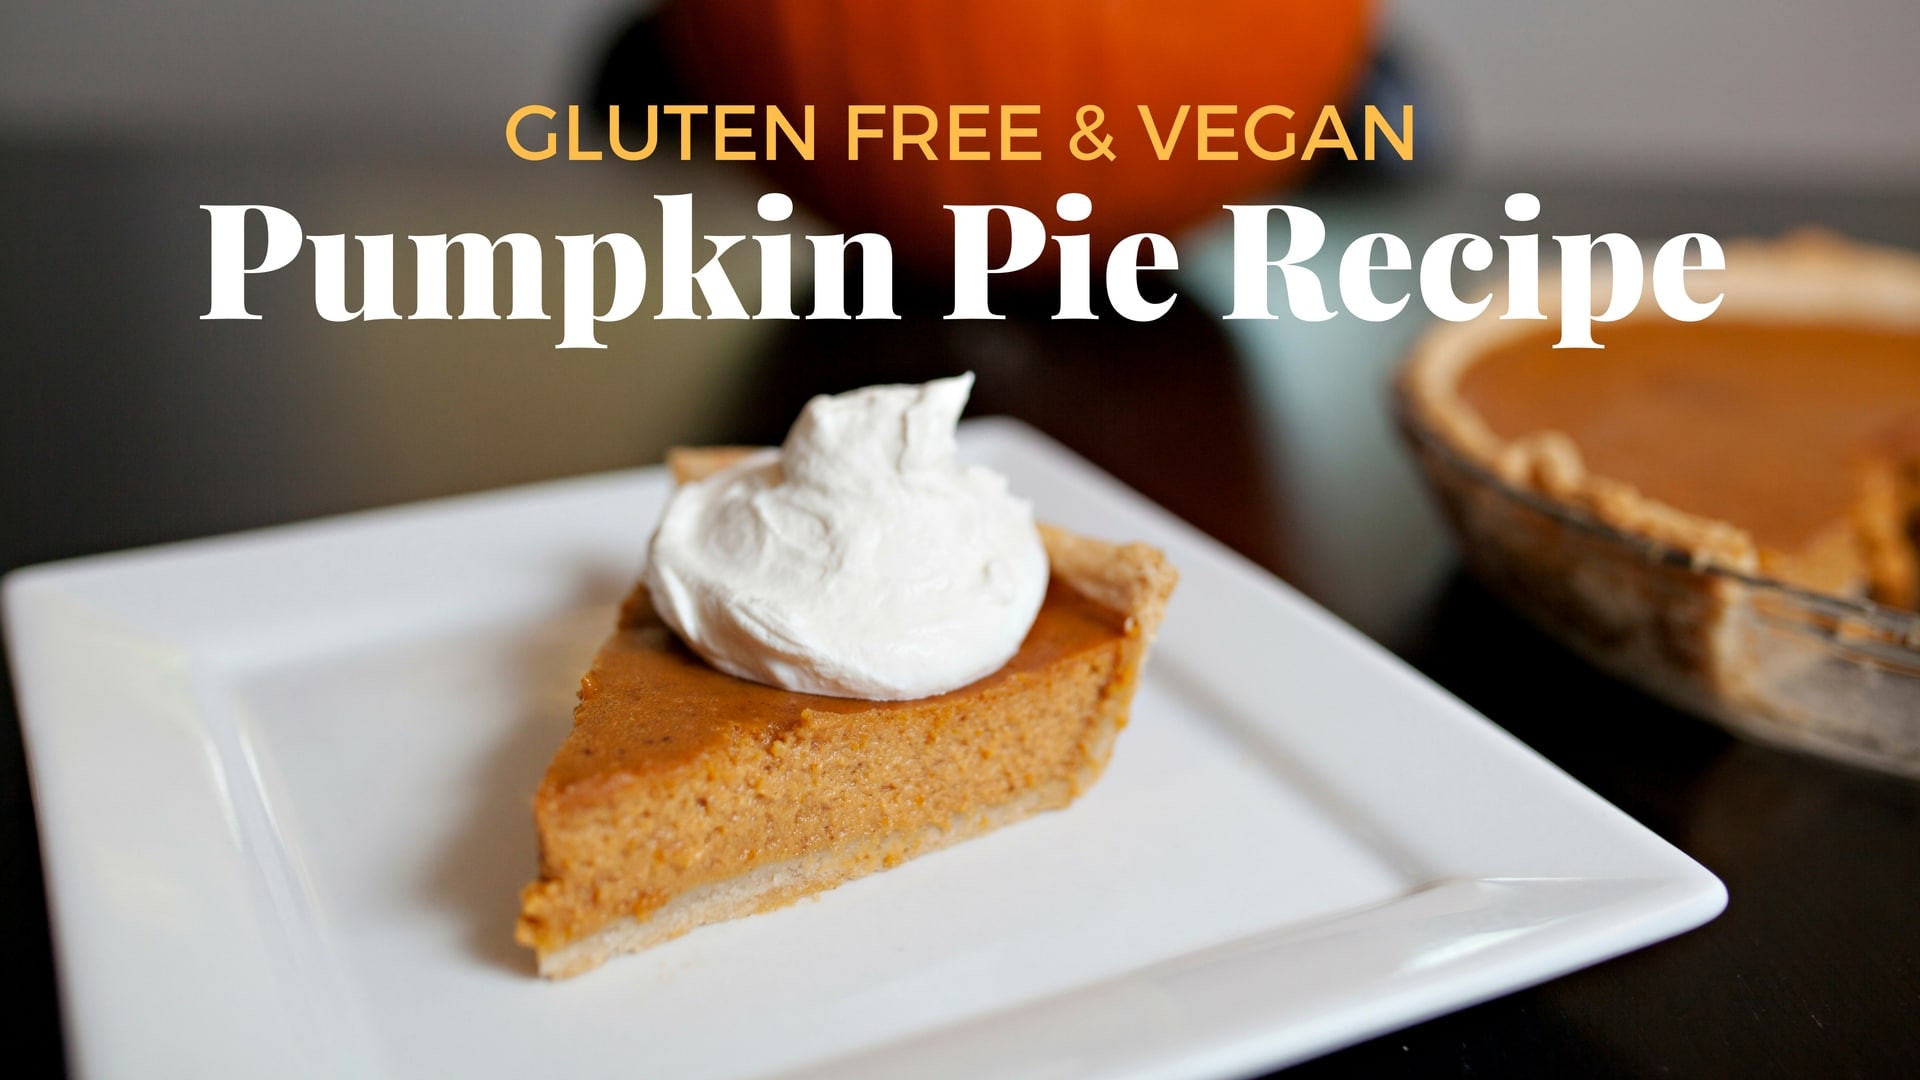 Vegan Pumpkin Pie Recipe
 The BEST Gluten Free & Vegan Pumpkin Pie Recipe